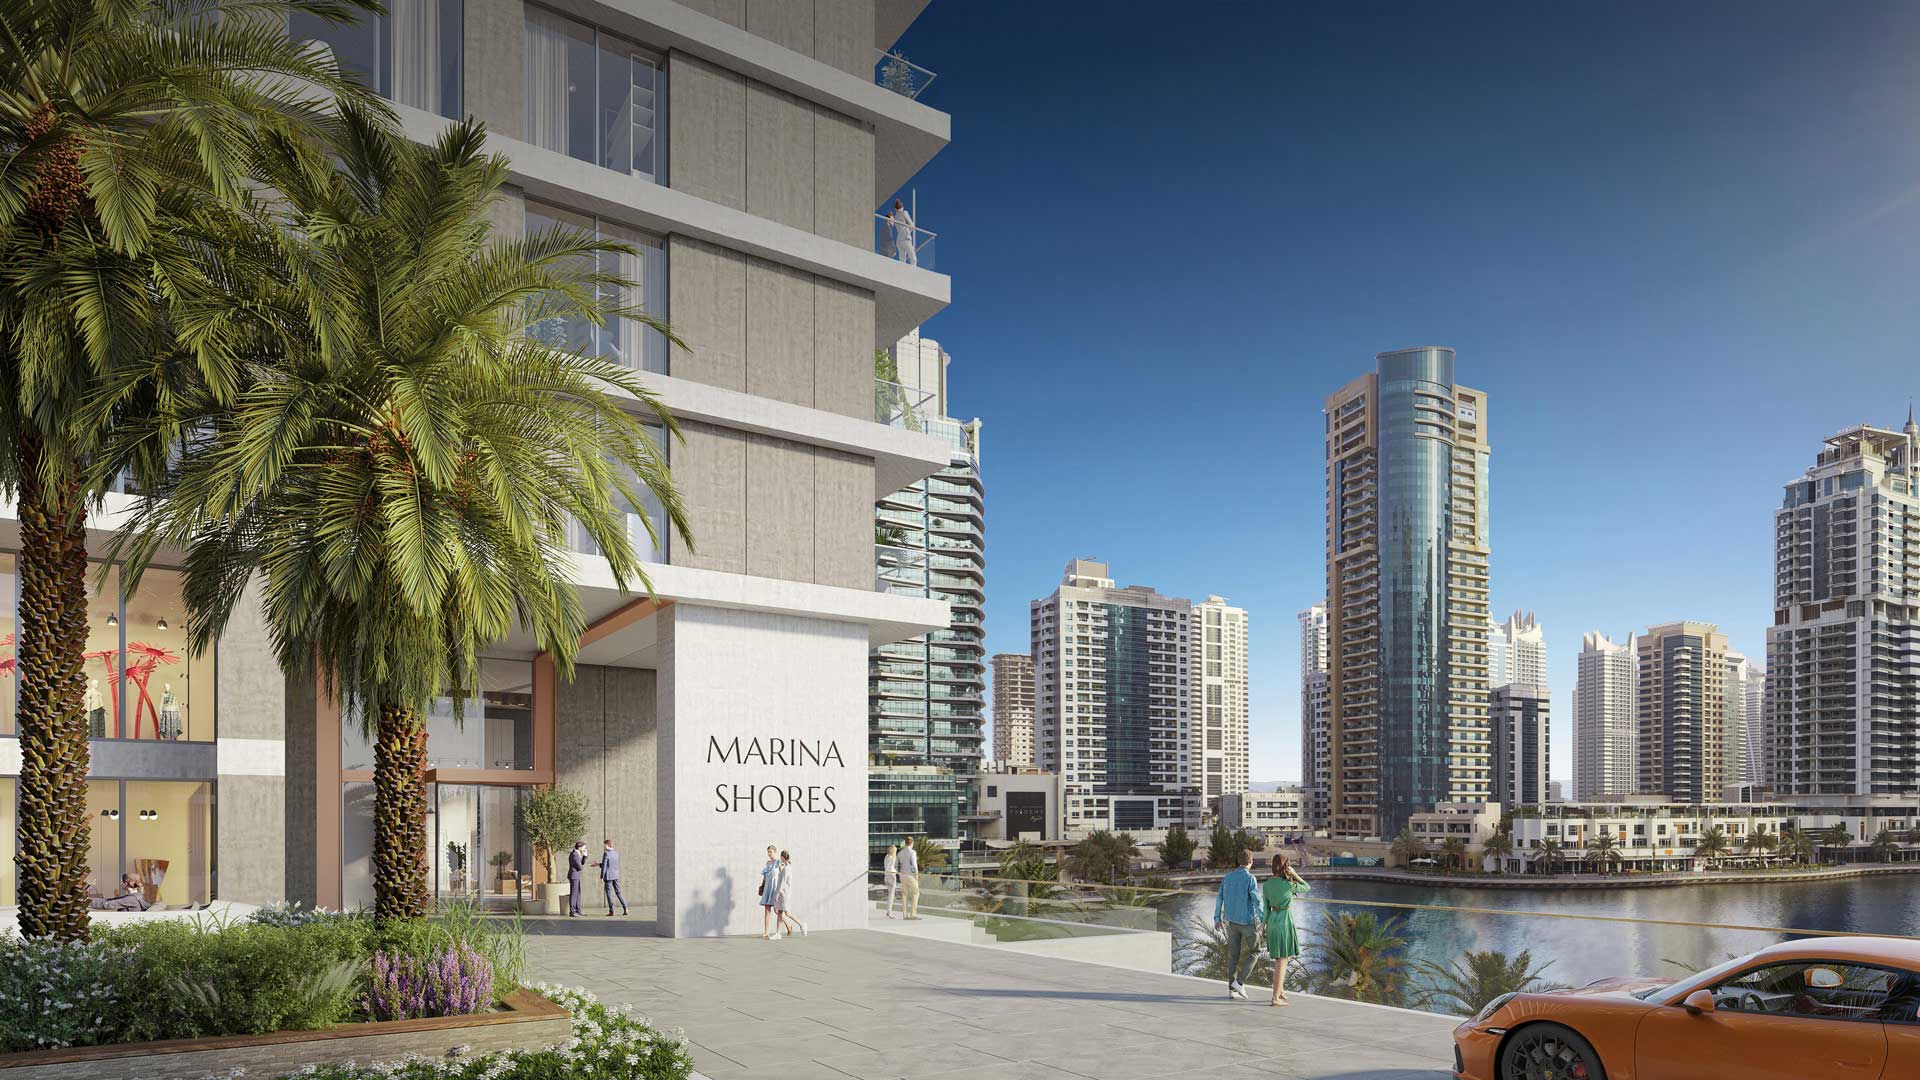 MARINA SHORES by Emaar Properties in Dubai Marina, Dubai